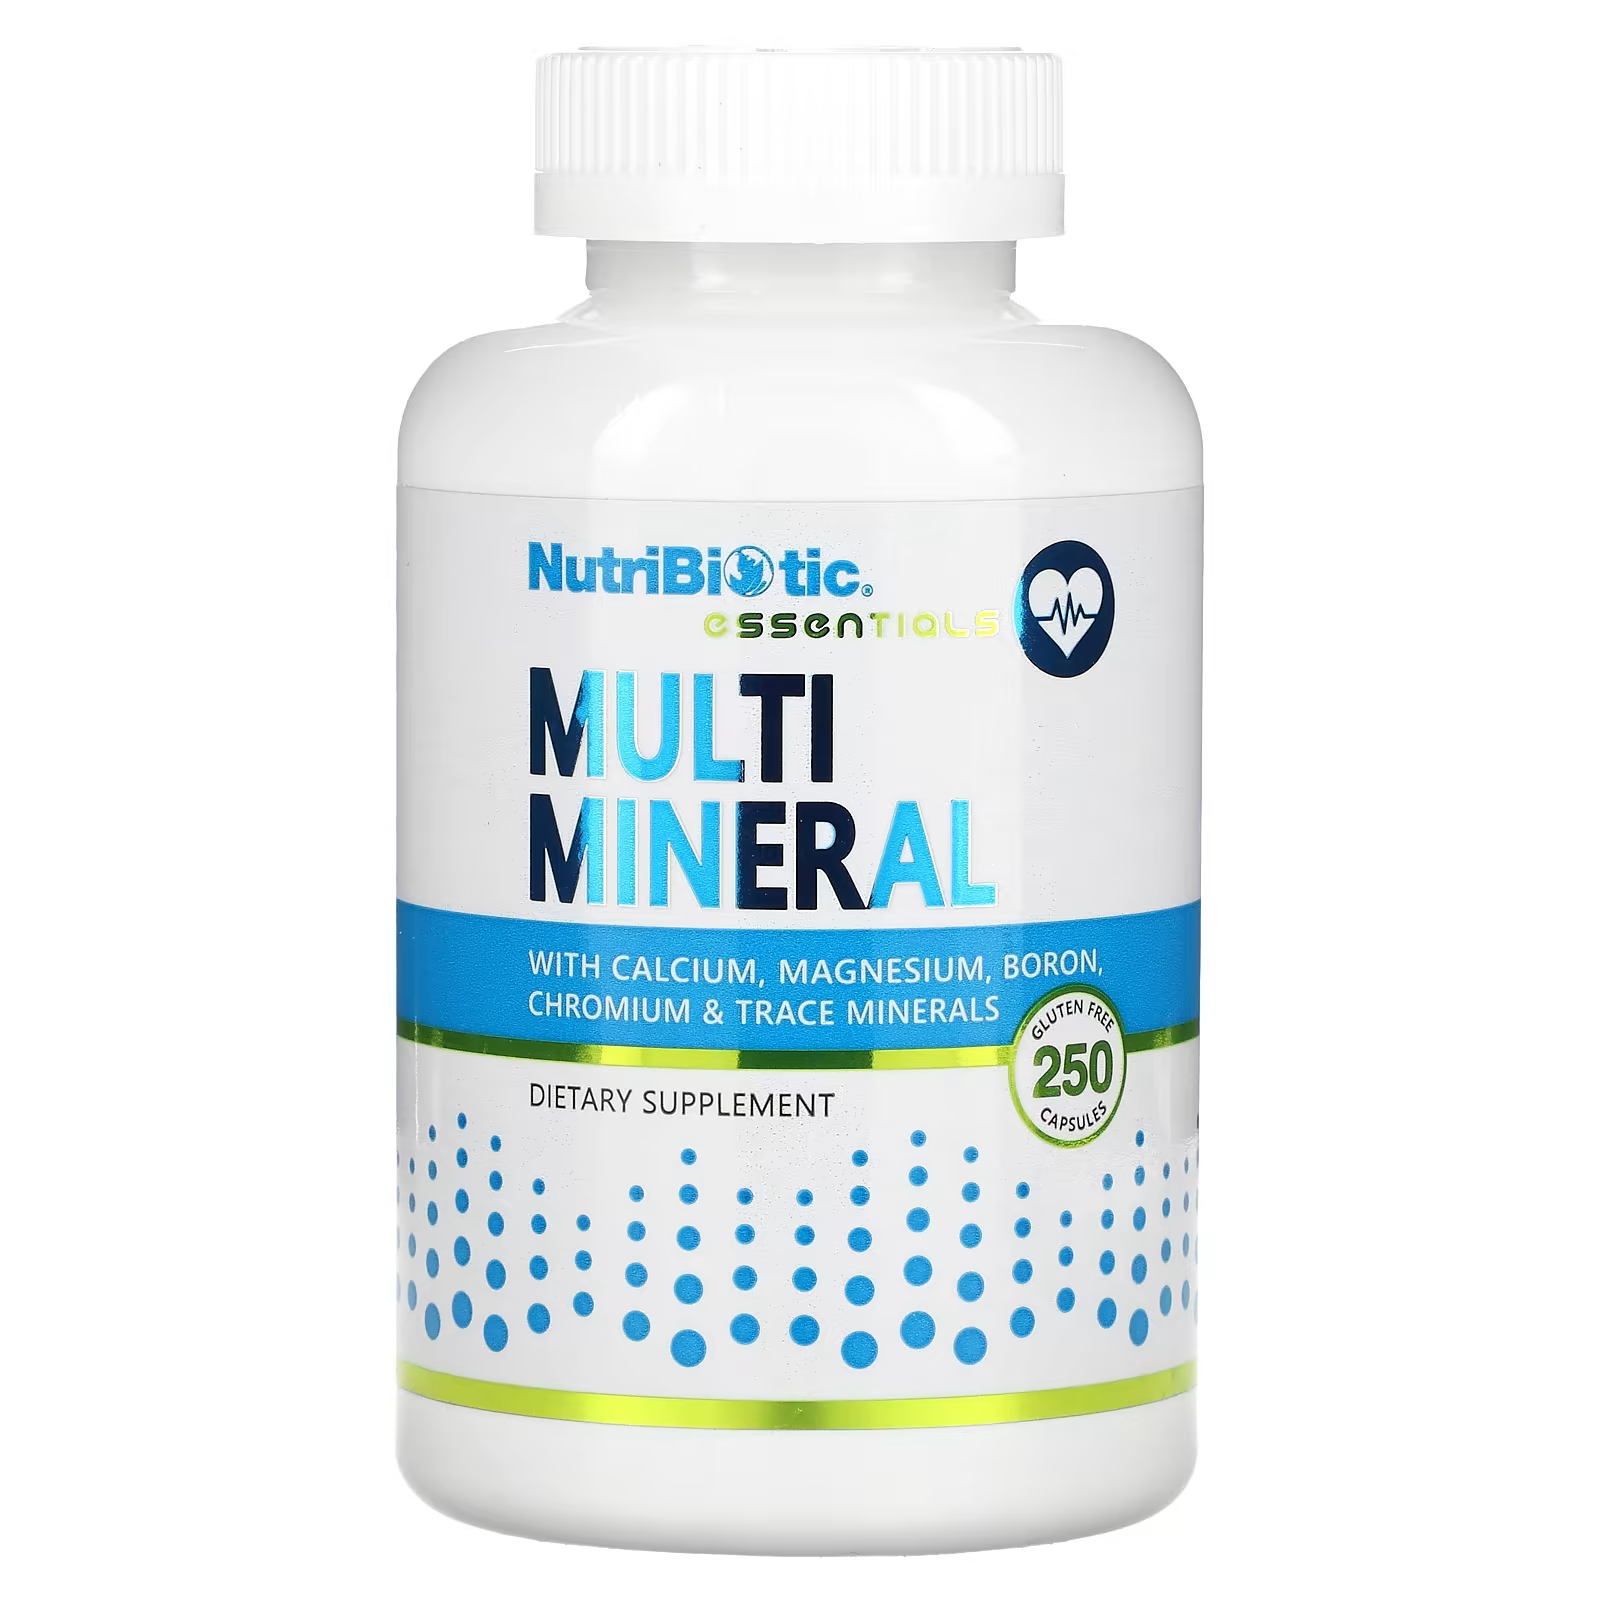 NutriBiotic Essentials Multi Mineral 250 капсул без глютена nutribiotic essentials мультиминерал 250 капсул без глютена